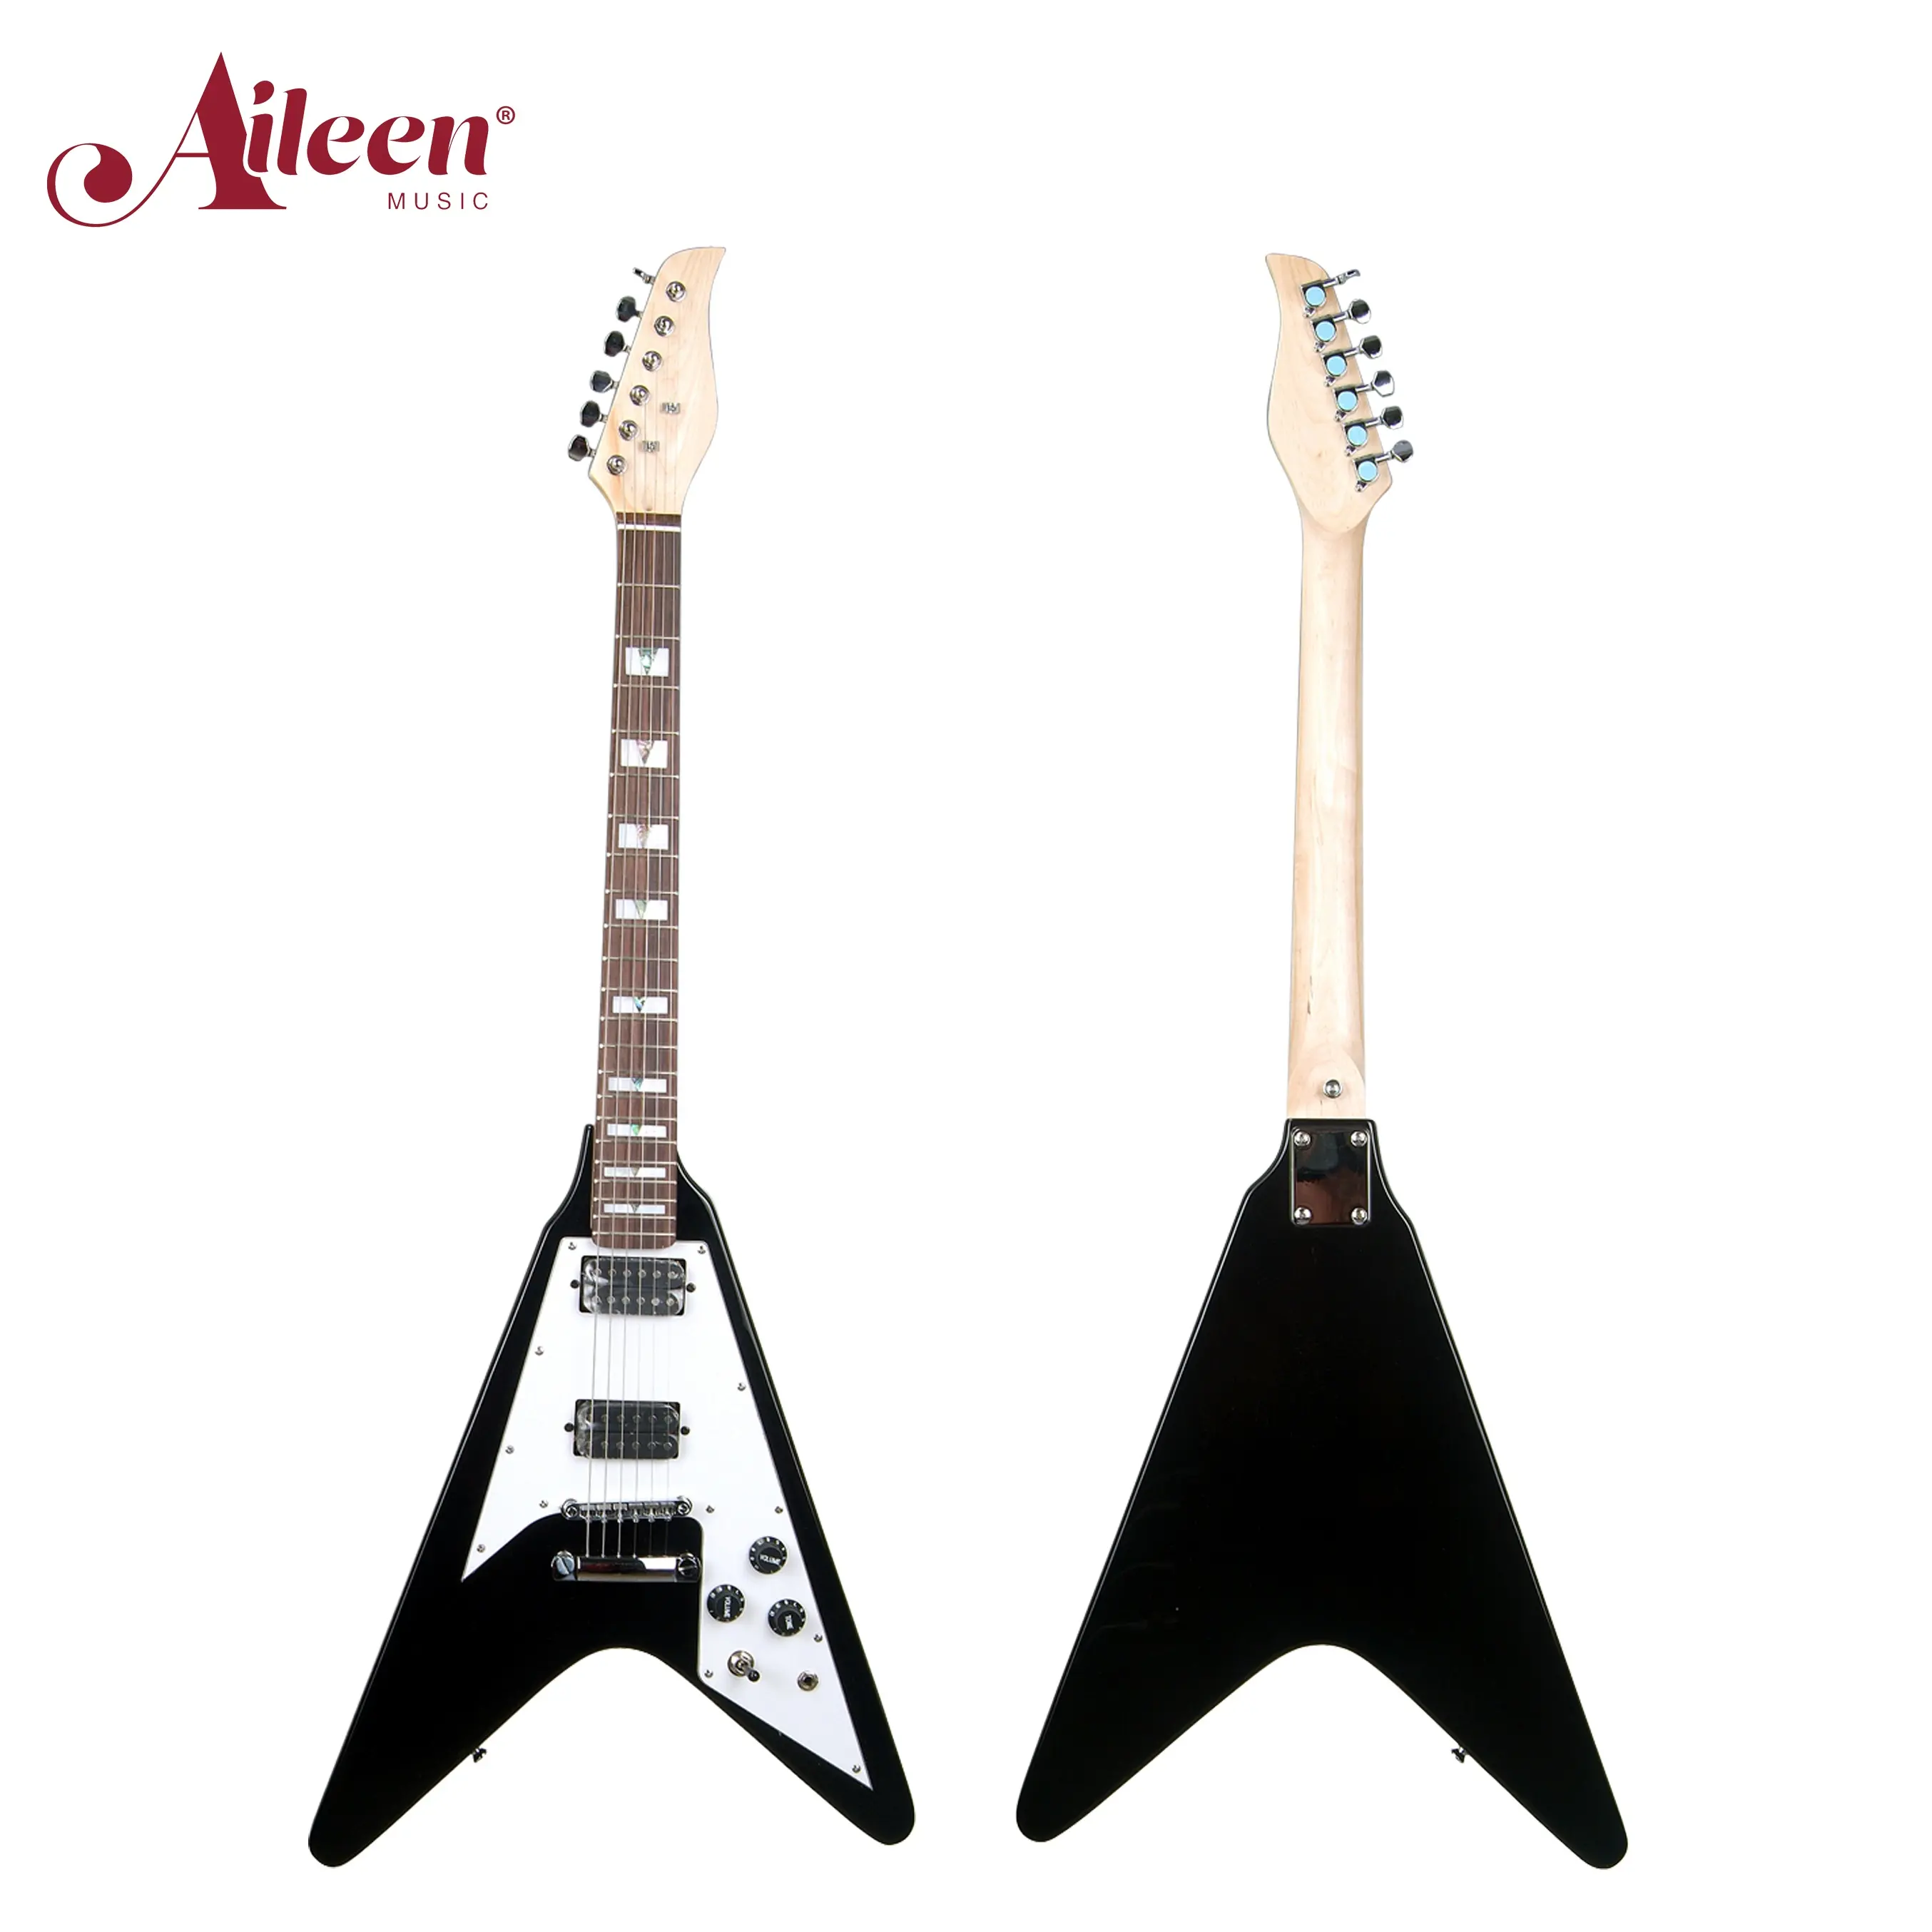 Heavy series high quality solid wood body TOM bridge electric guitar (EGH600)